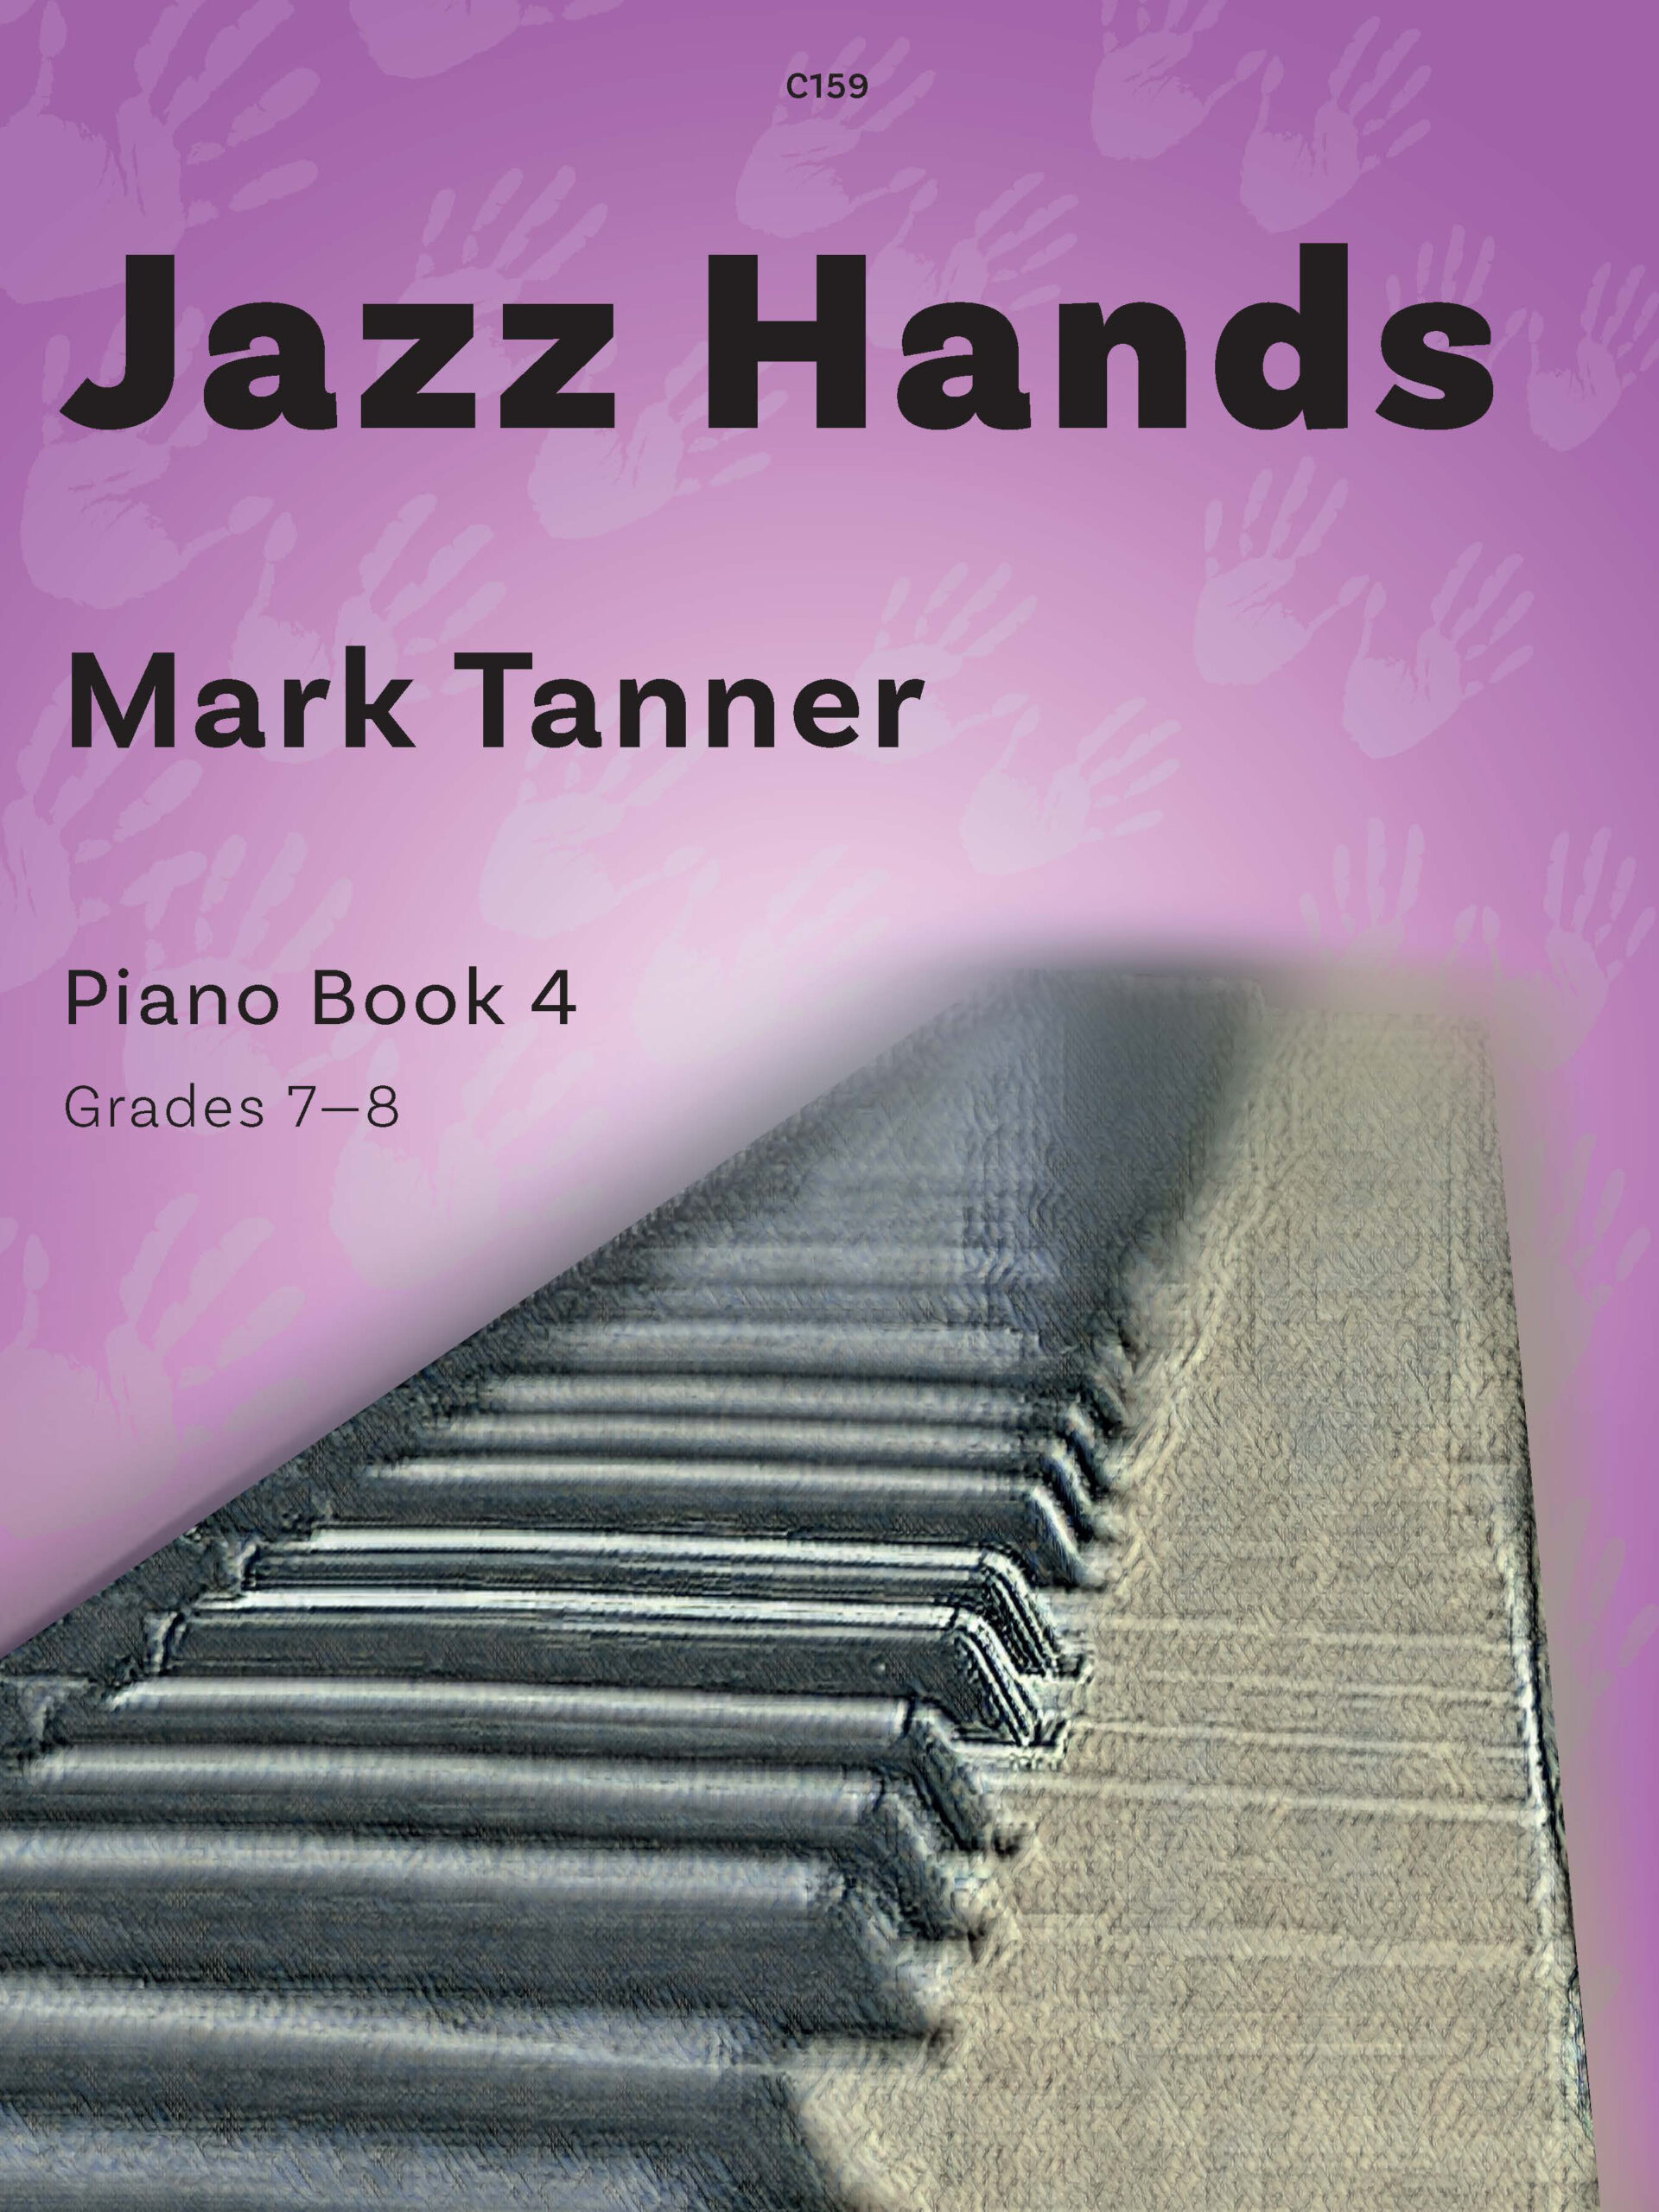 Jazz Hands Book 4 Tanner Piano Sheet Music Songbook